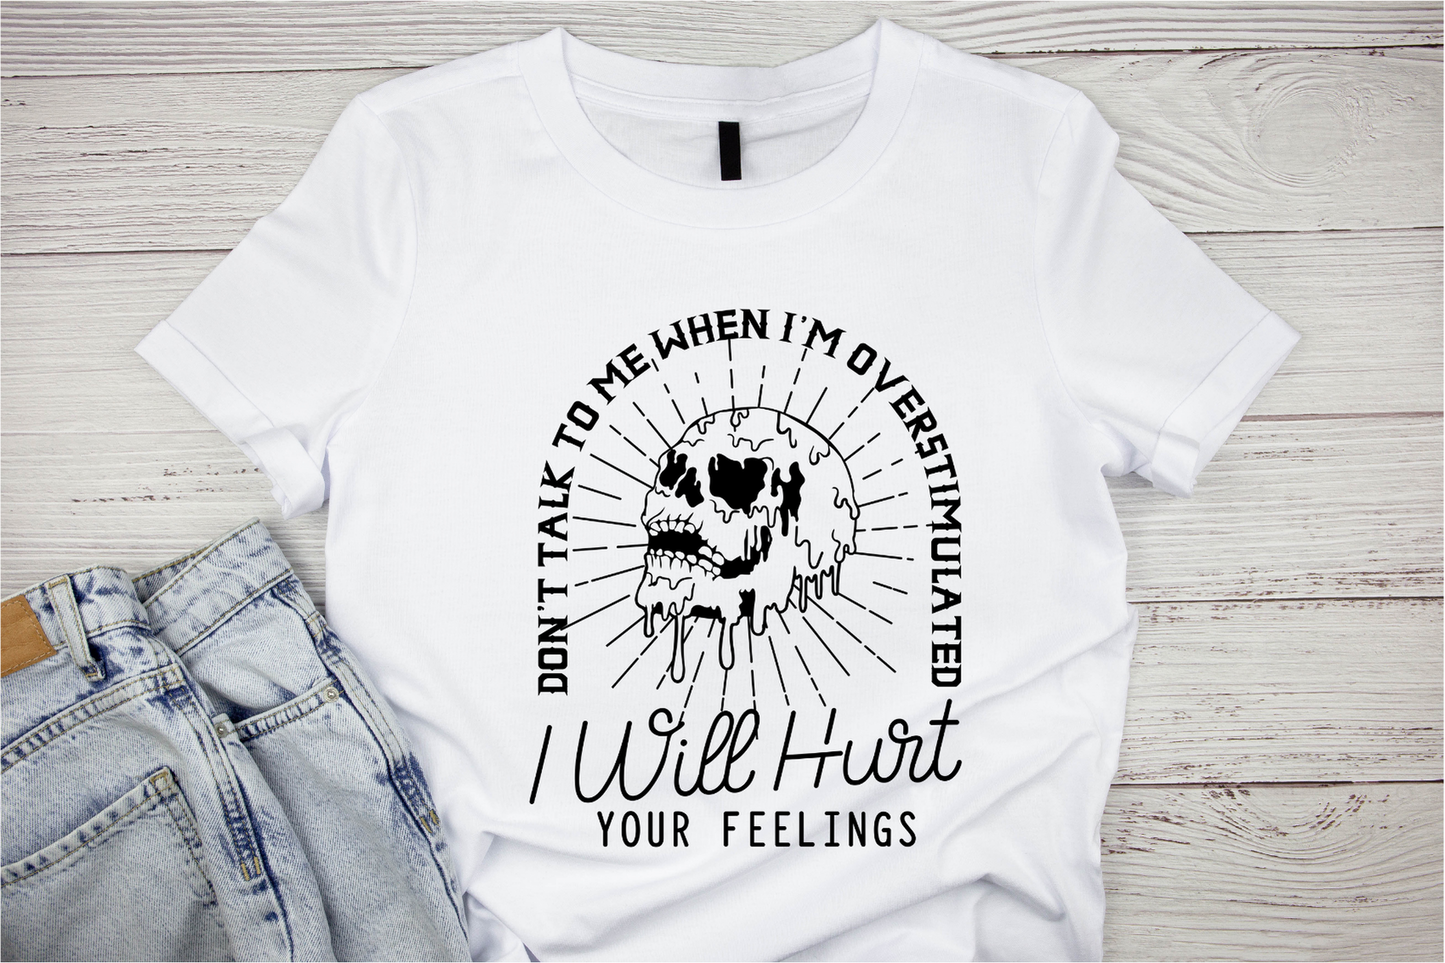 I Will Hurt Your Feelings Women's T-shirt